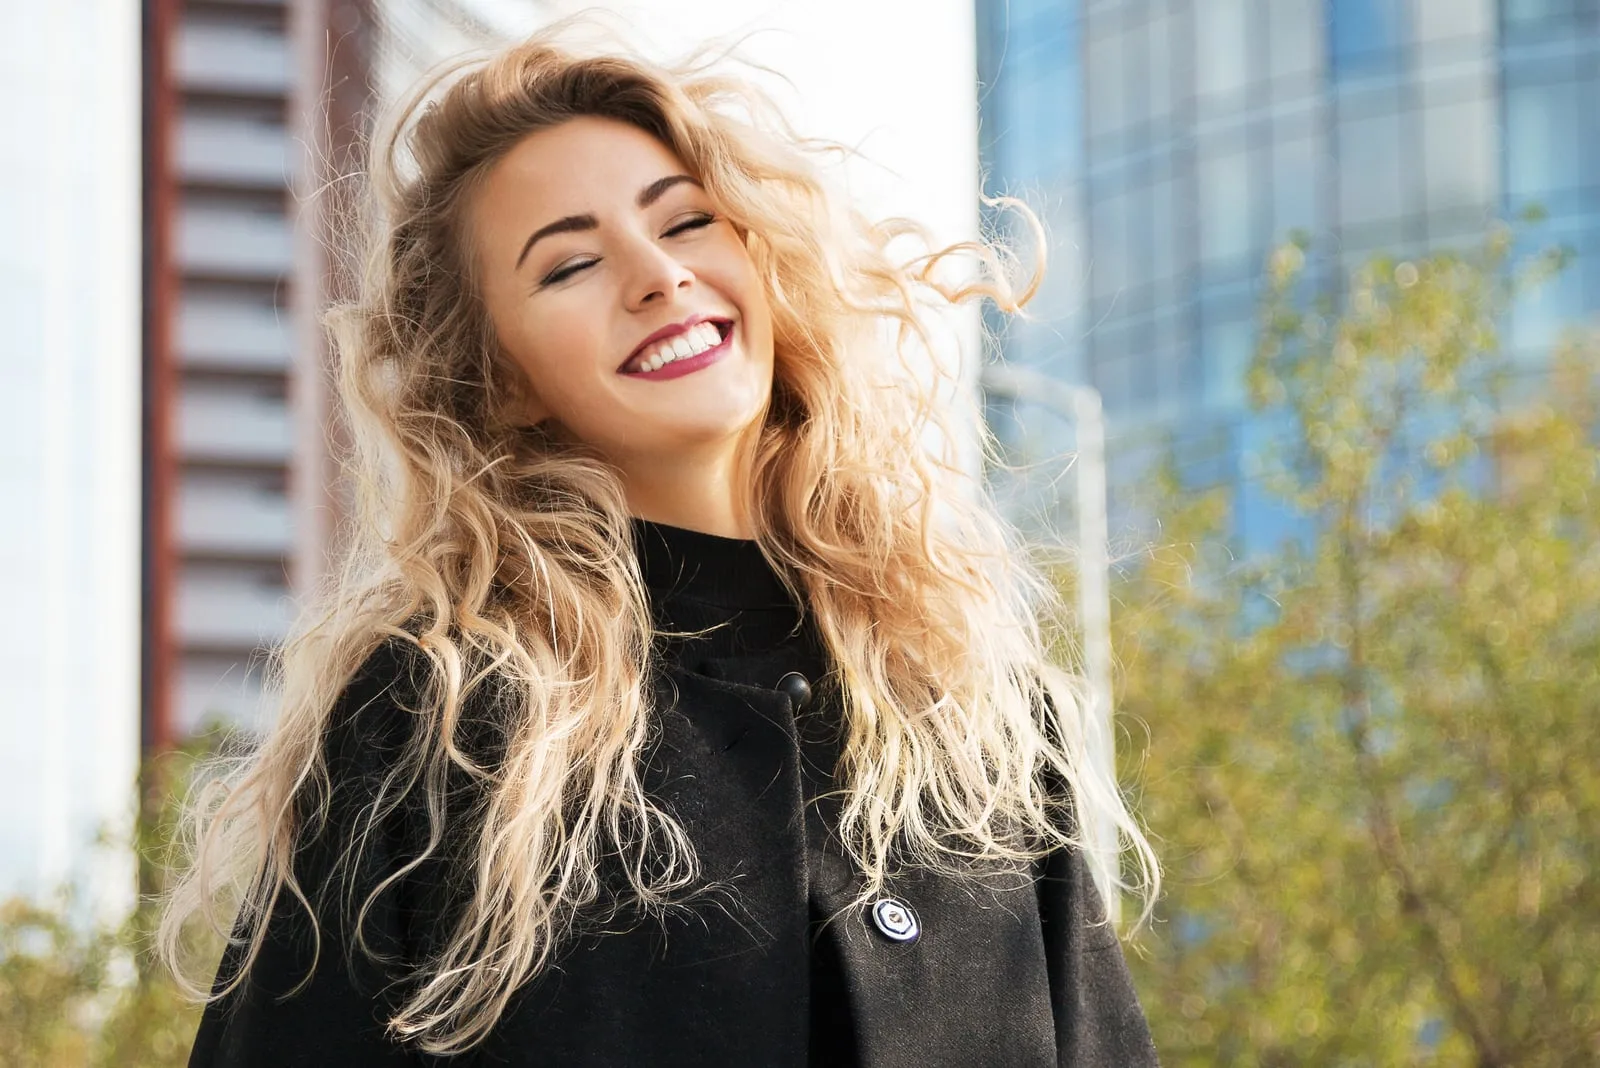 a portrait of a smiling blonde in a black coat